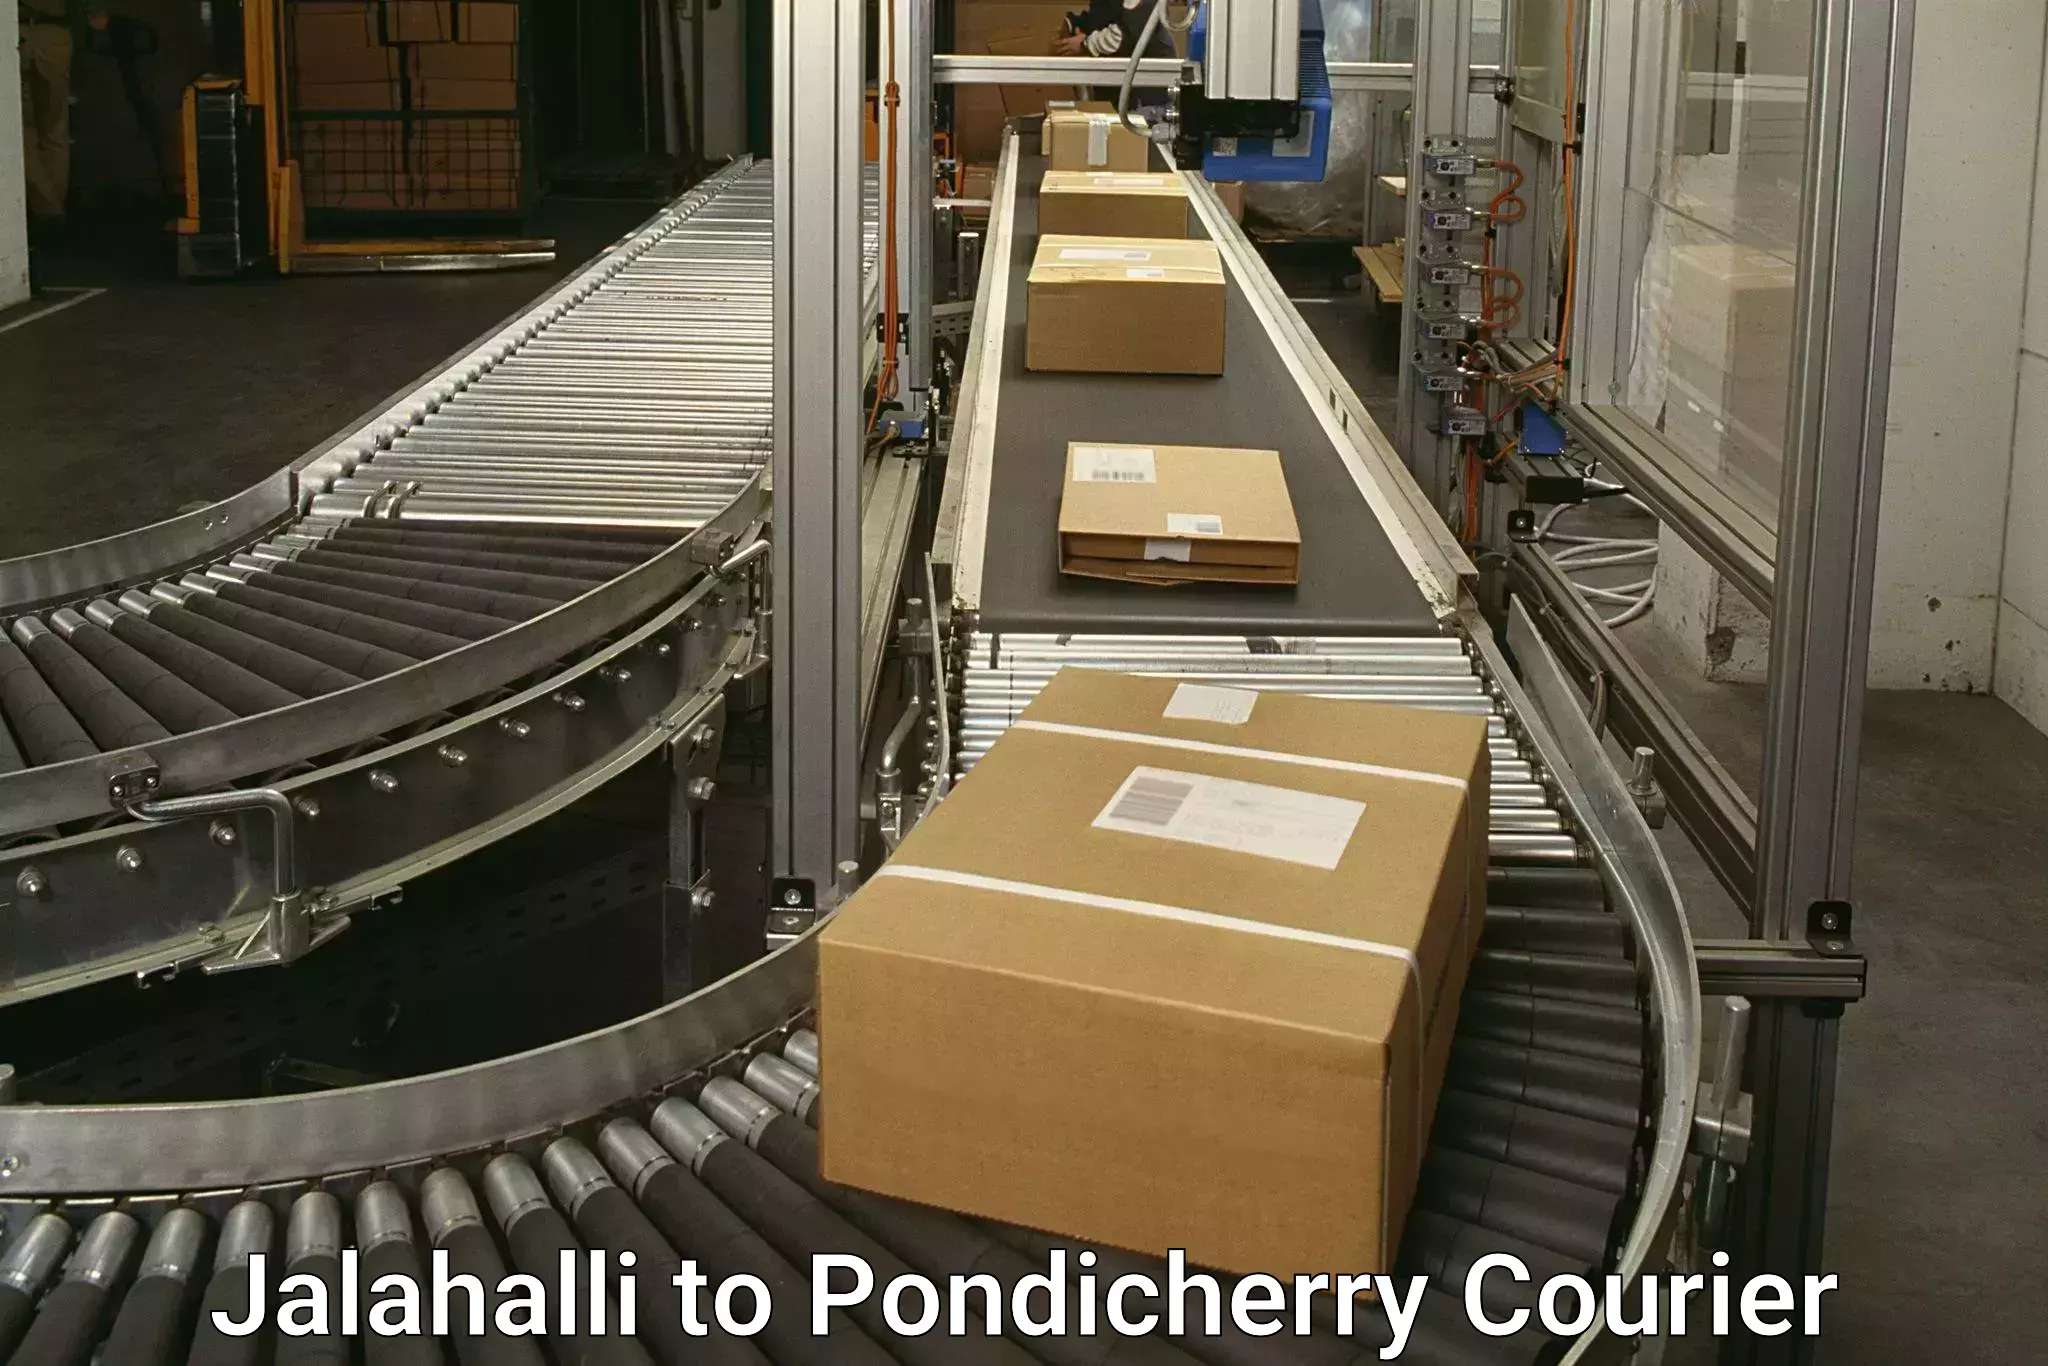 Global logistics network Jalahalli to Pondicherry